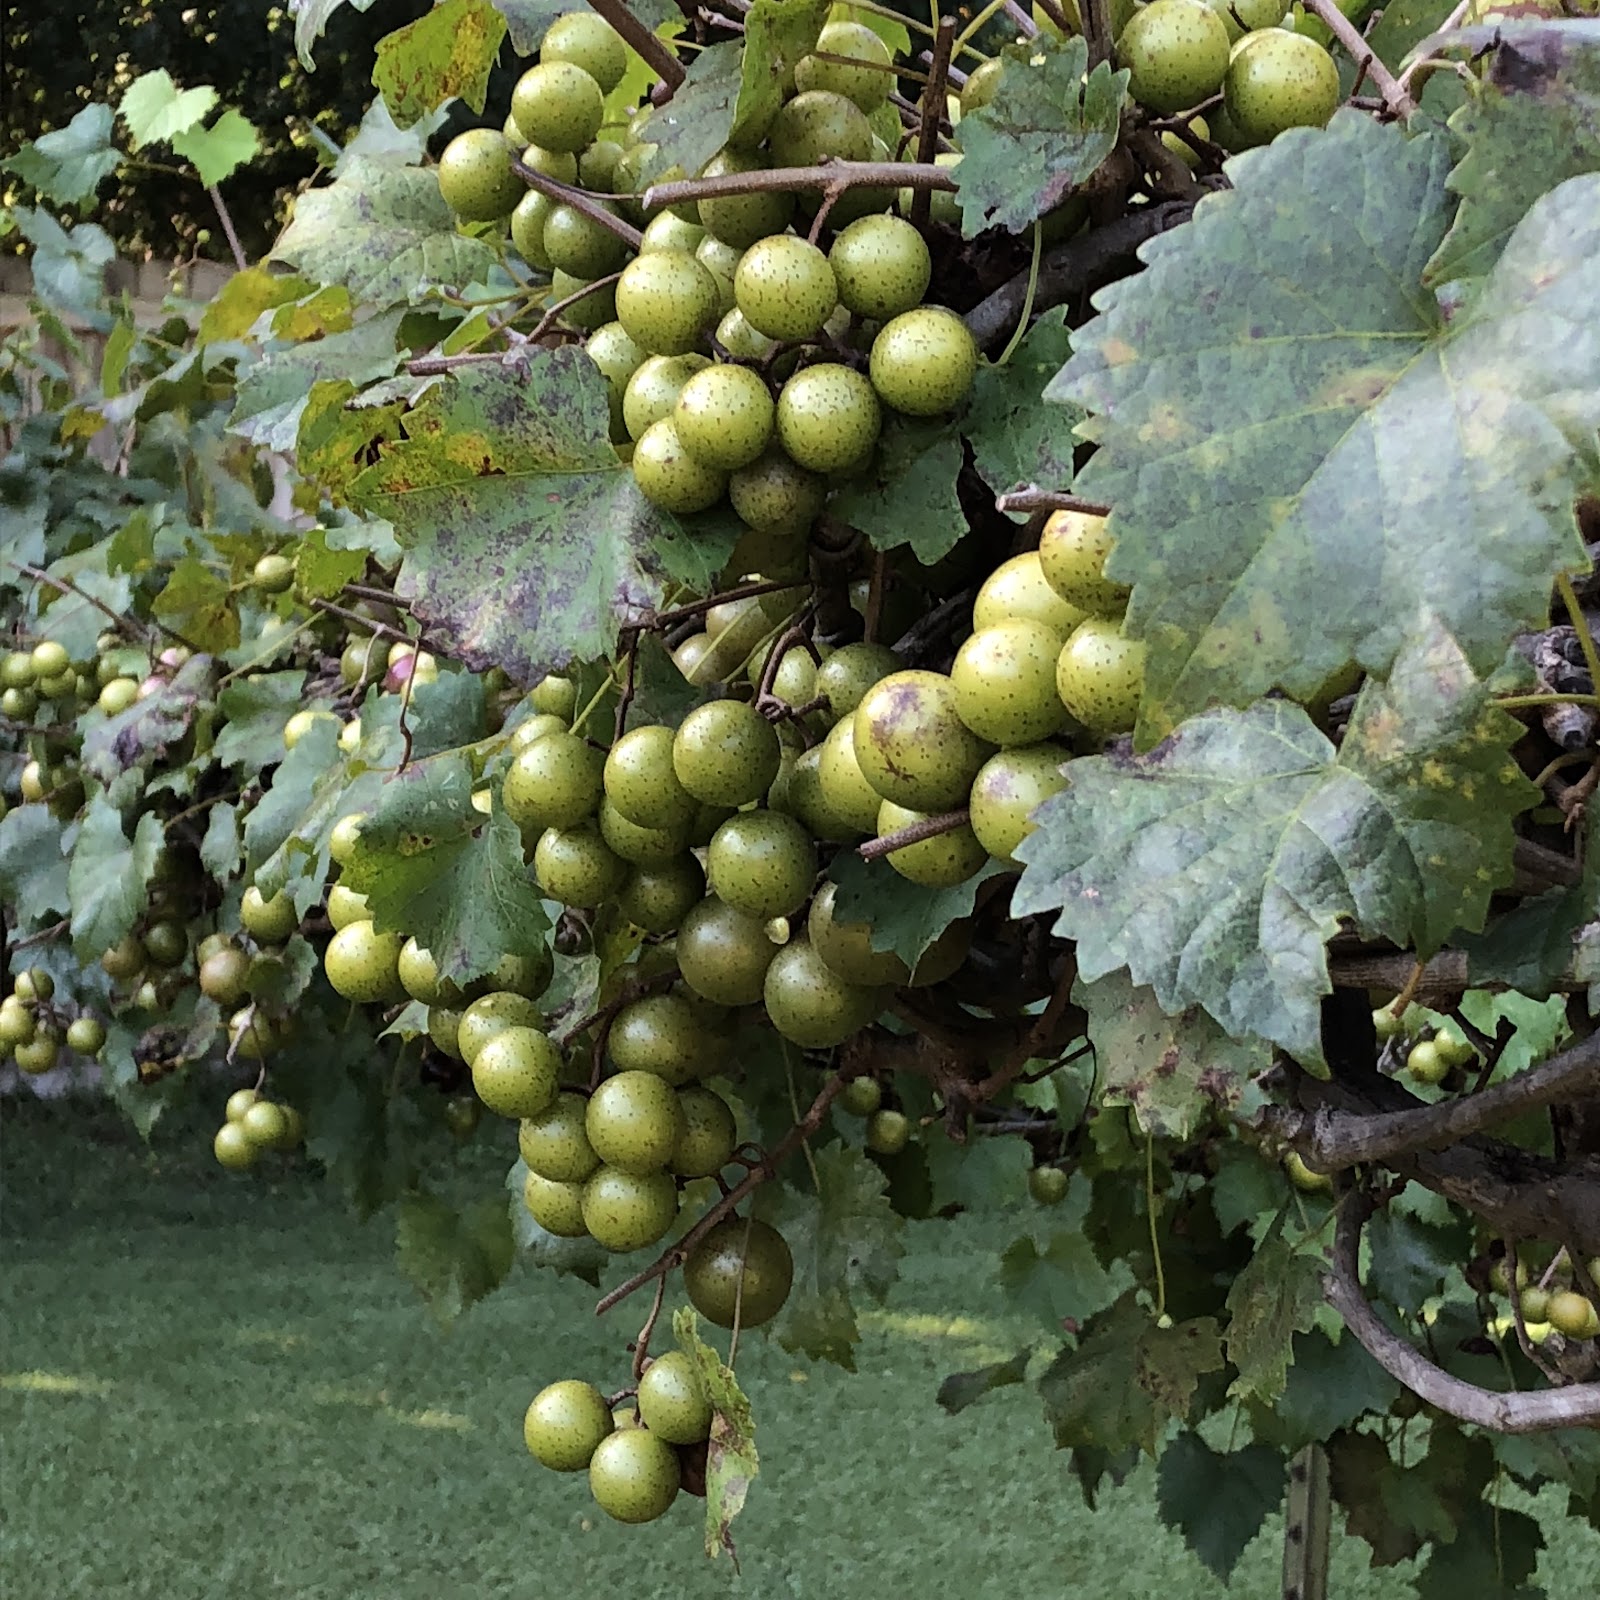 4 u-pick vineyards to find muscadine grapes and wine around Birmingham